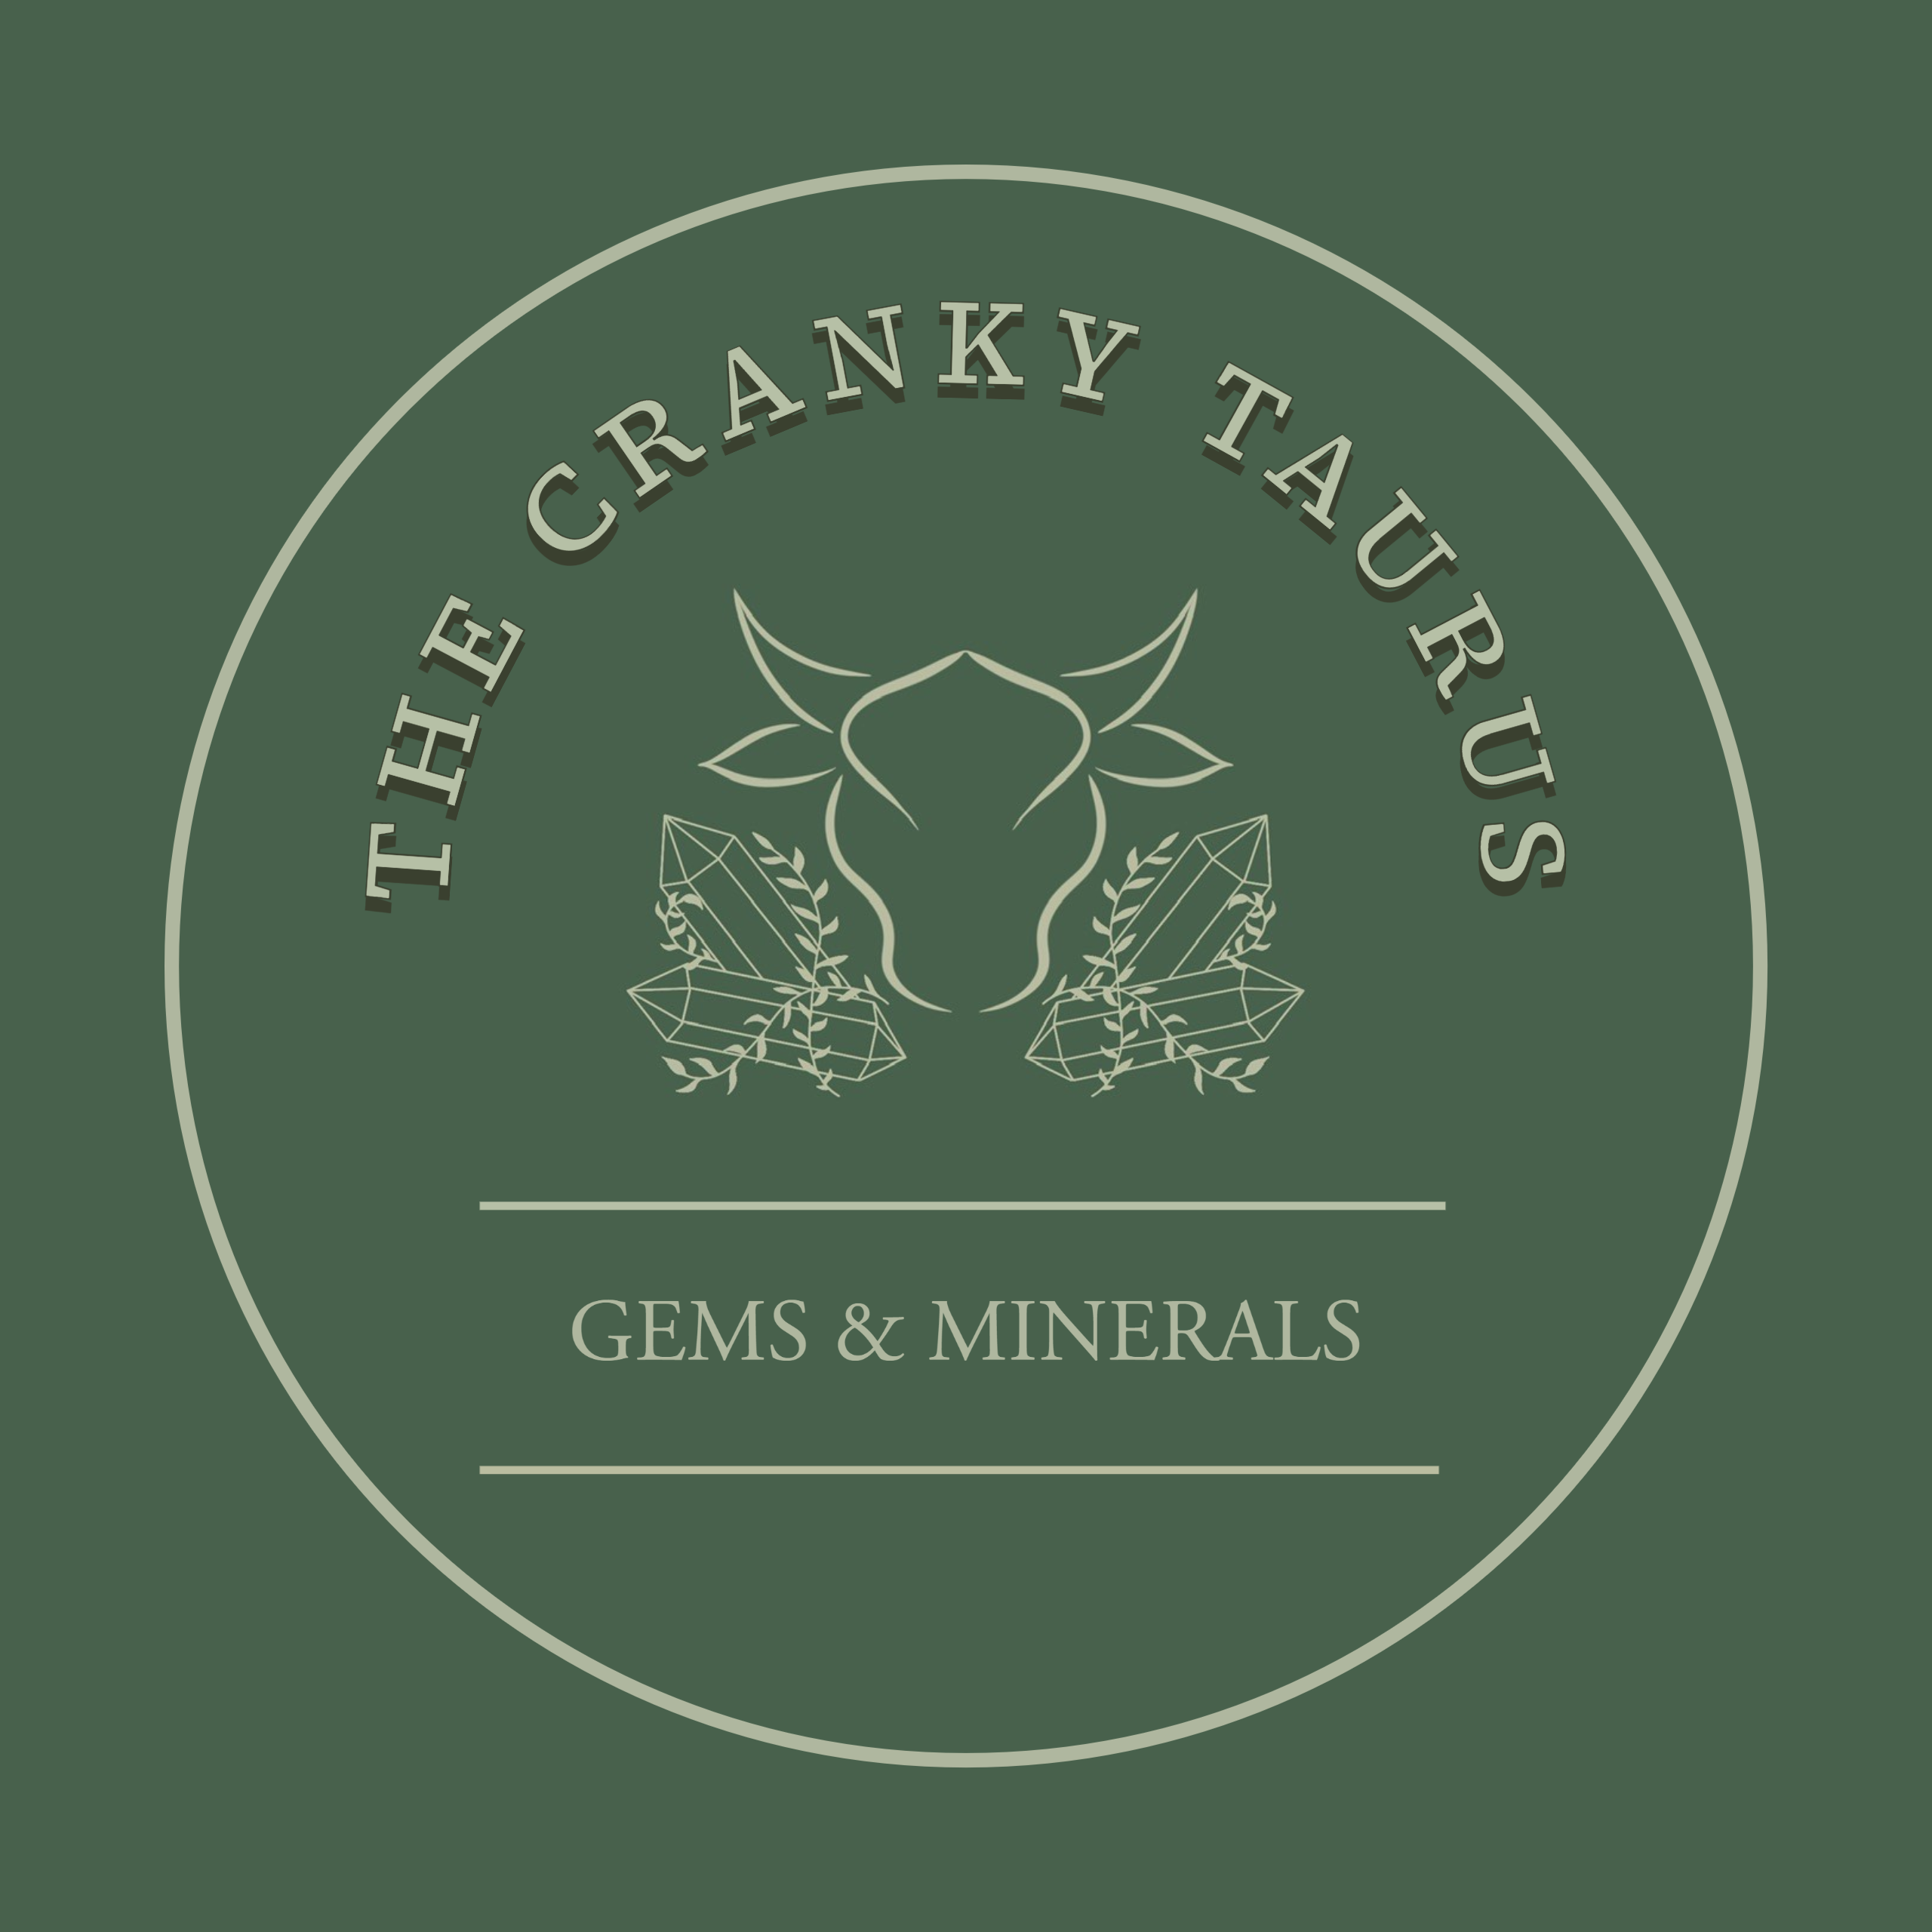 The Cranky Taurus - Gems & Minerals